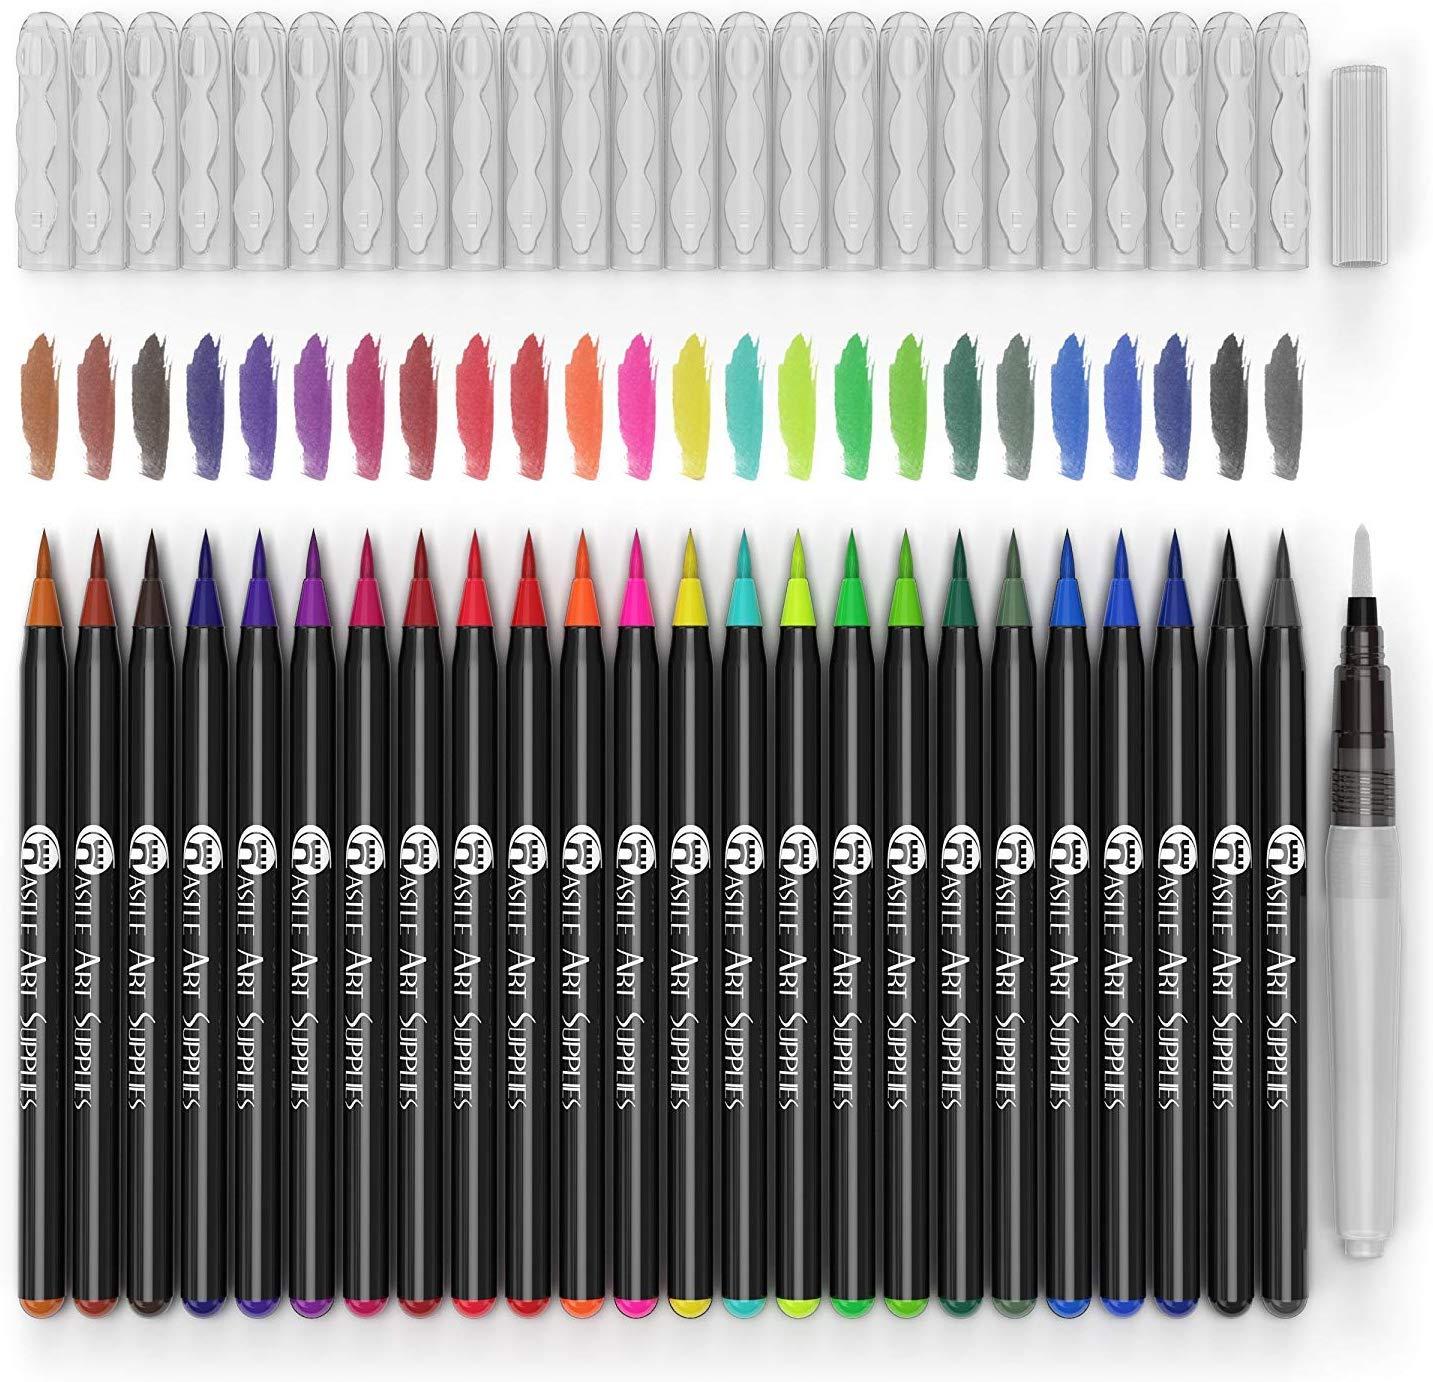 Castle Art Supplies Watercolor Brush Pens Set of 24 - Vibrant Markers with Flexible Nylon Brush Tip